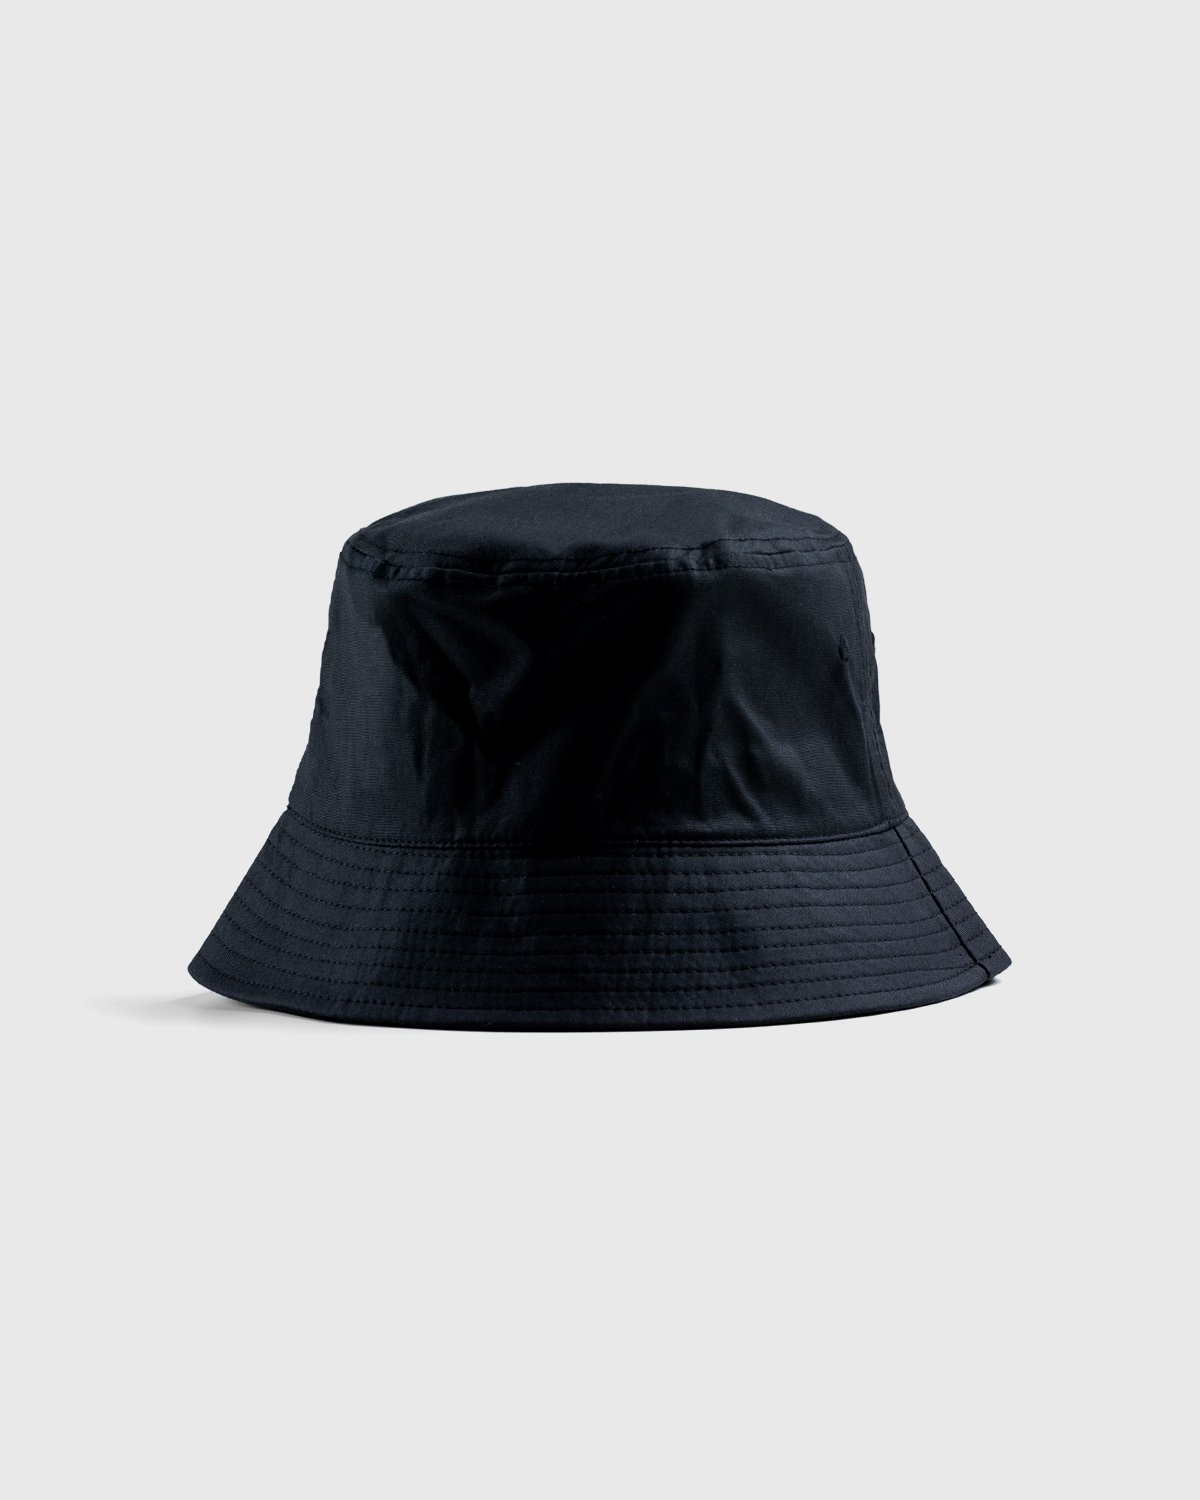 Noon Goons - Gonzo Bucket Hat Black - Accessories - Black - Image 2